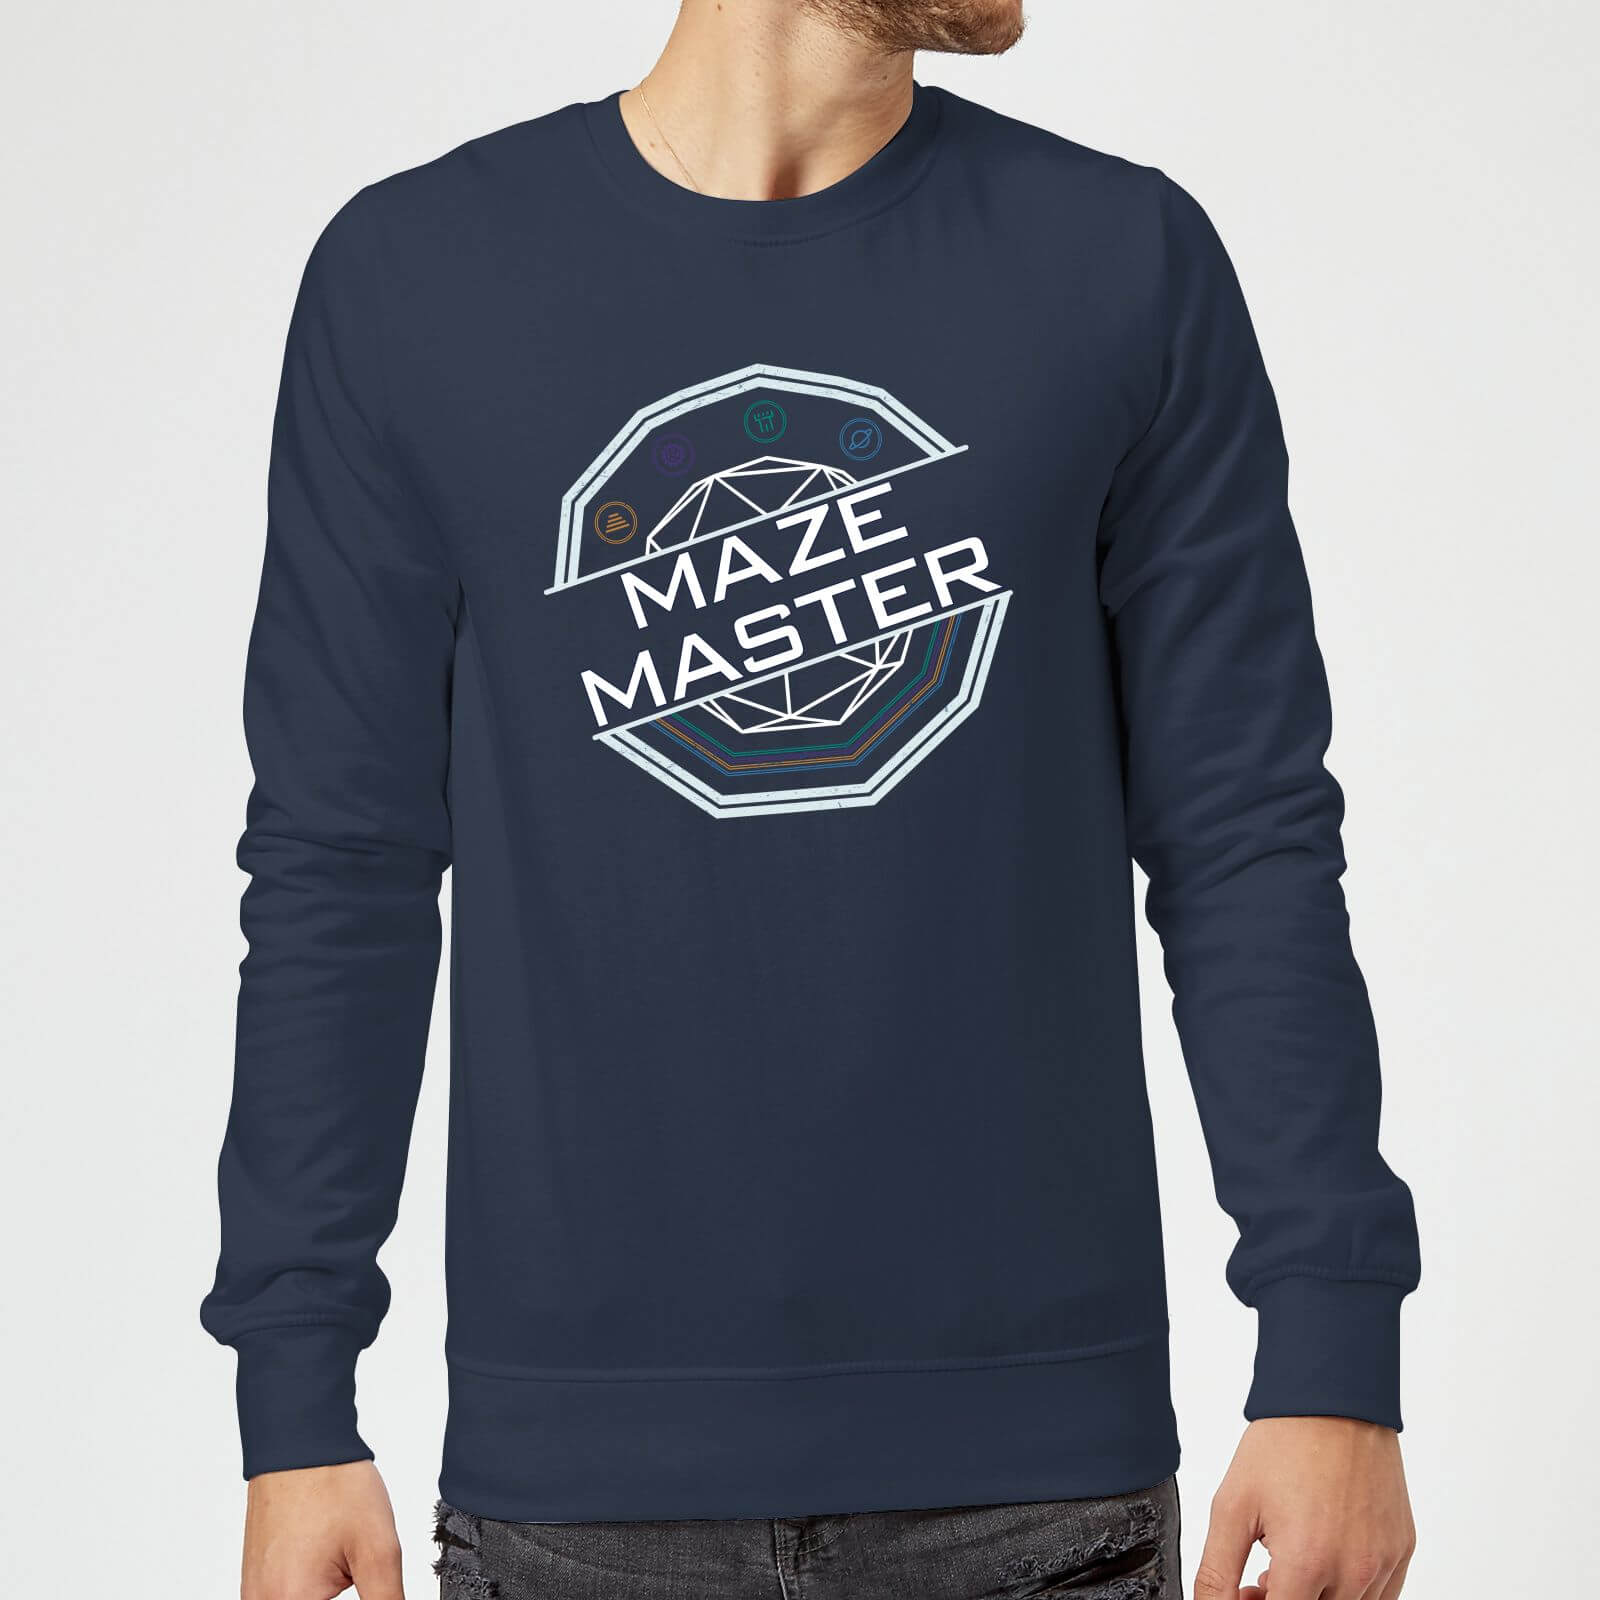 Crystal Maze Maze Master Sweatshirt - Navy - S - Navy